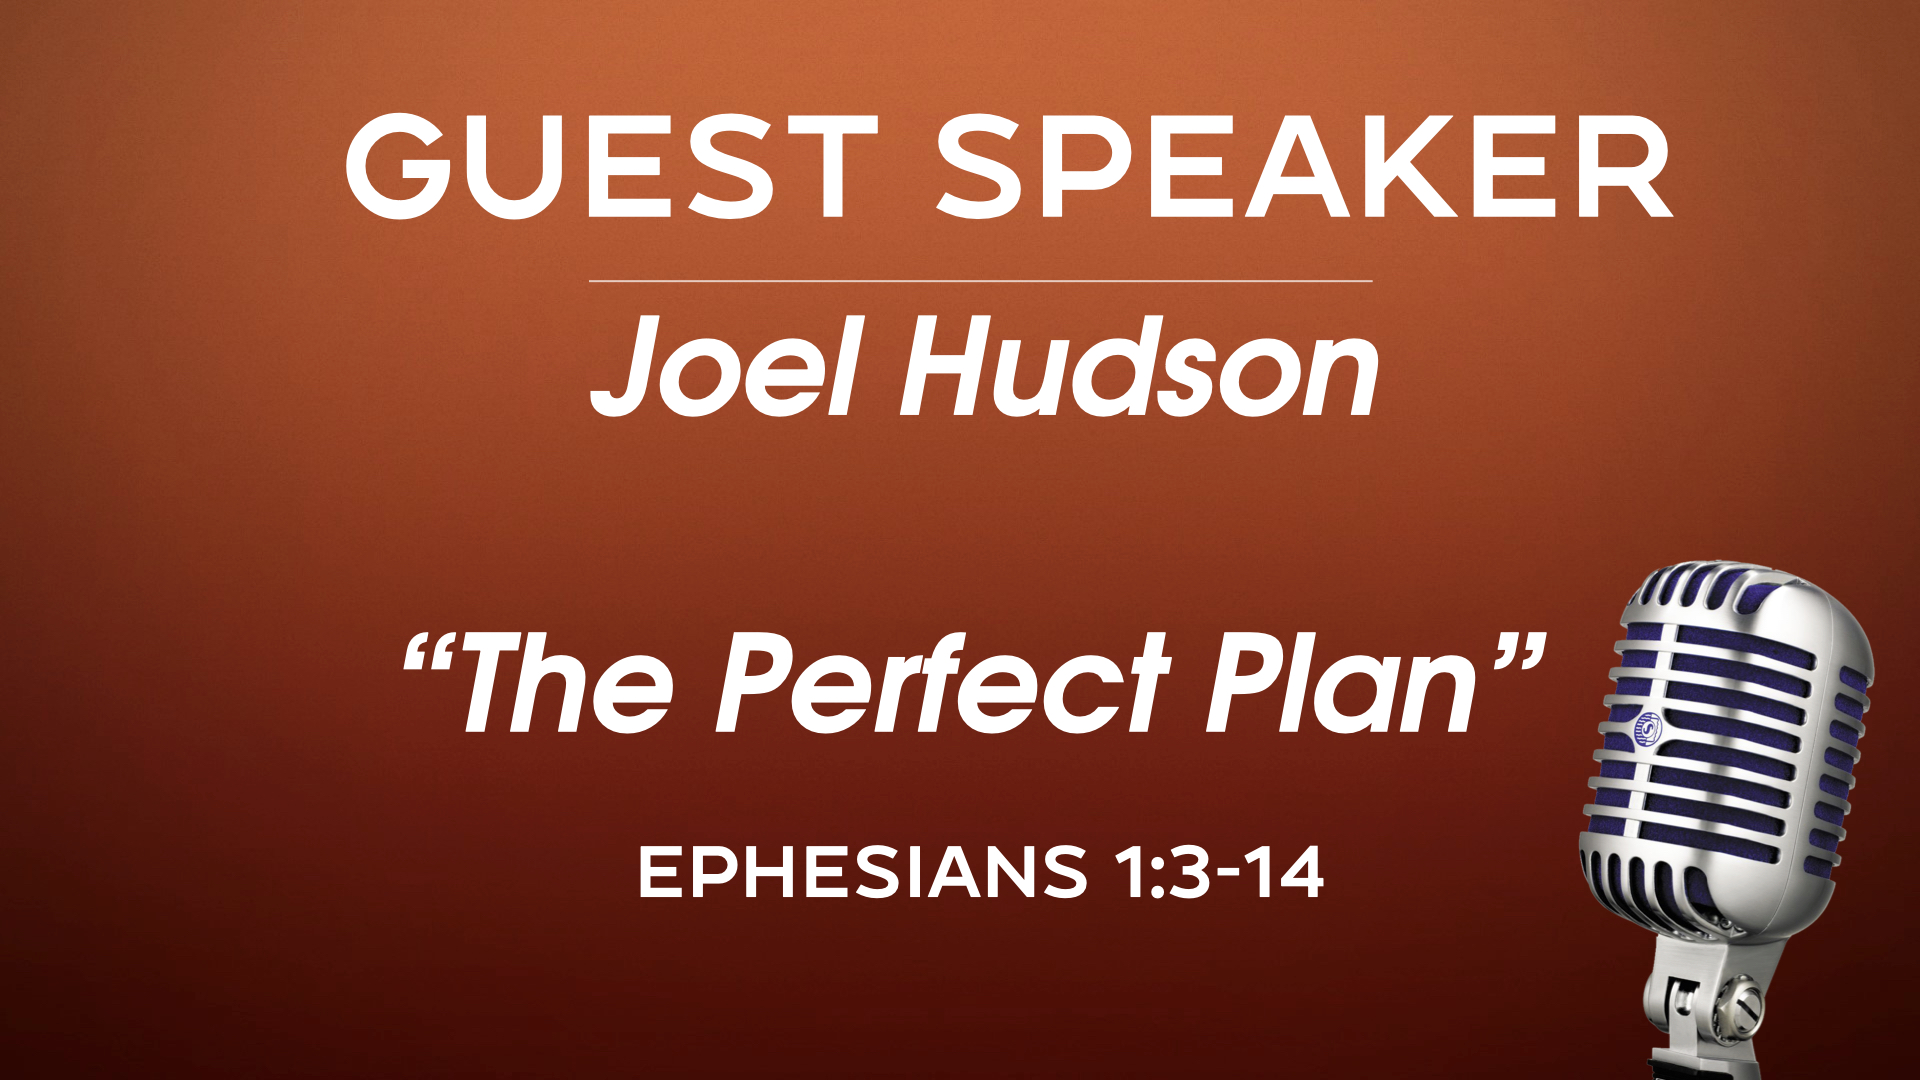 The Perfect Plan - Joel Hudson Guest Speaker banner